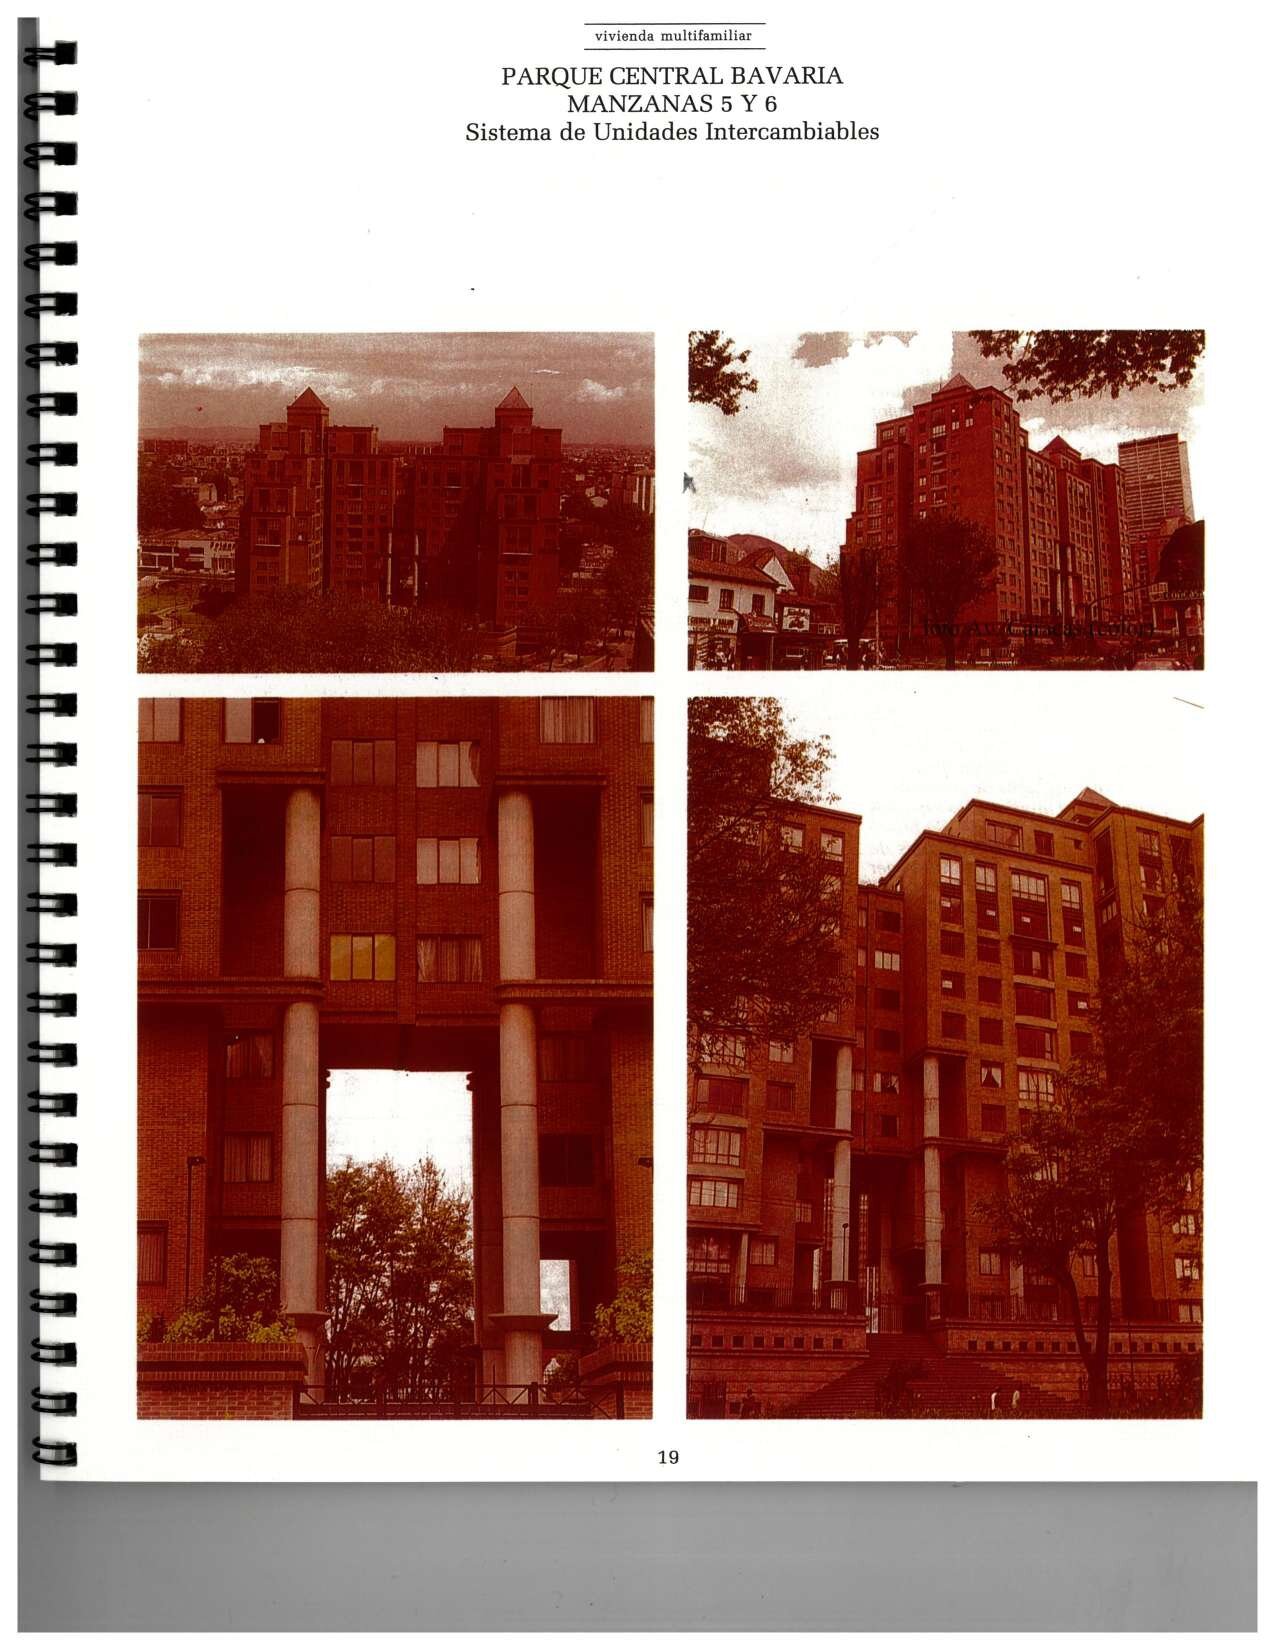 1995_Obra Contexto Urbano_Revista PROA_compressed_page-0019.jpg